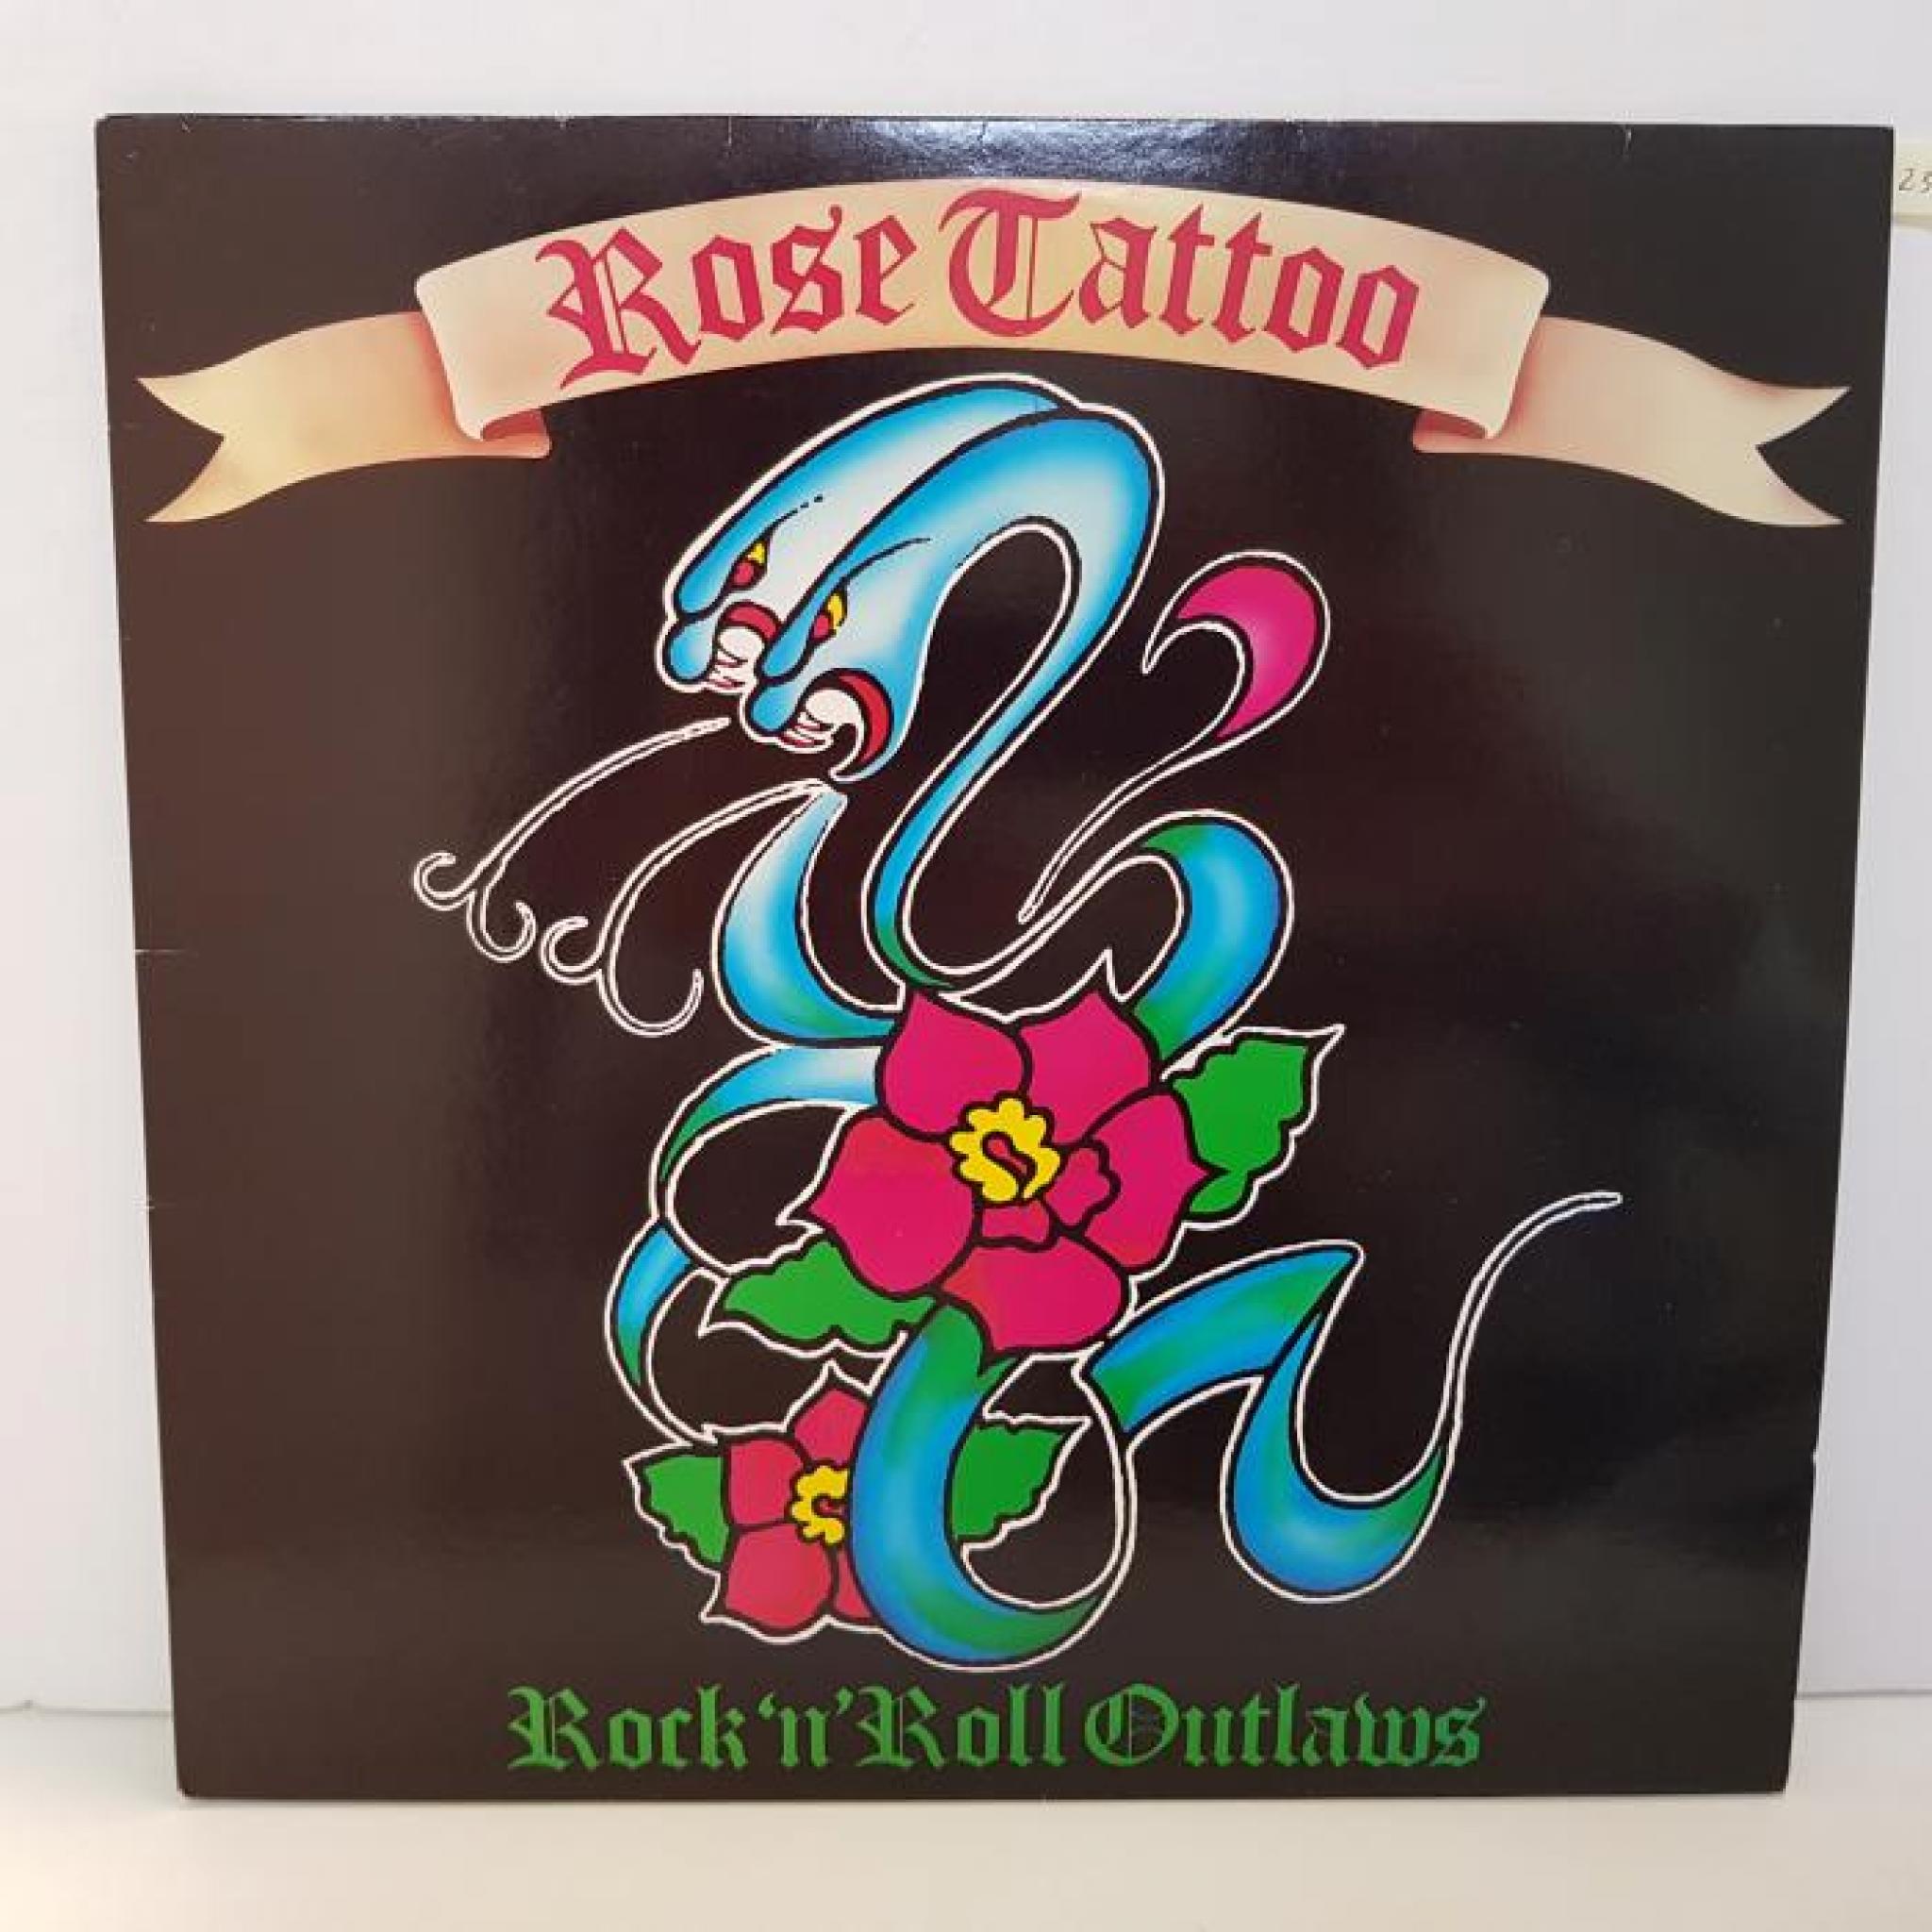 ROSE TATTOO - rock 'n' roll outlaws. CAL125, 12